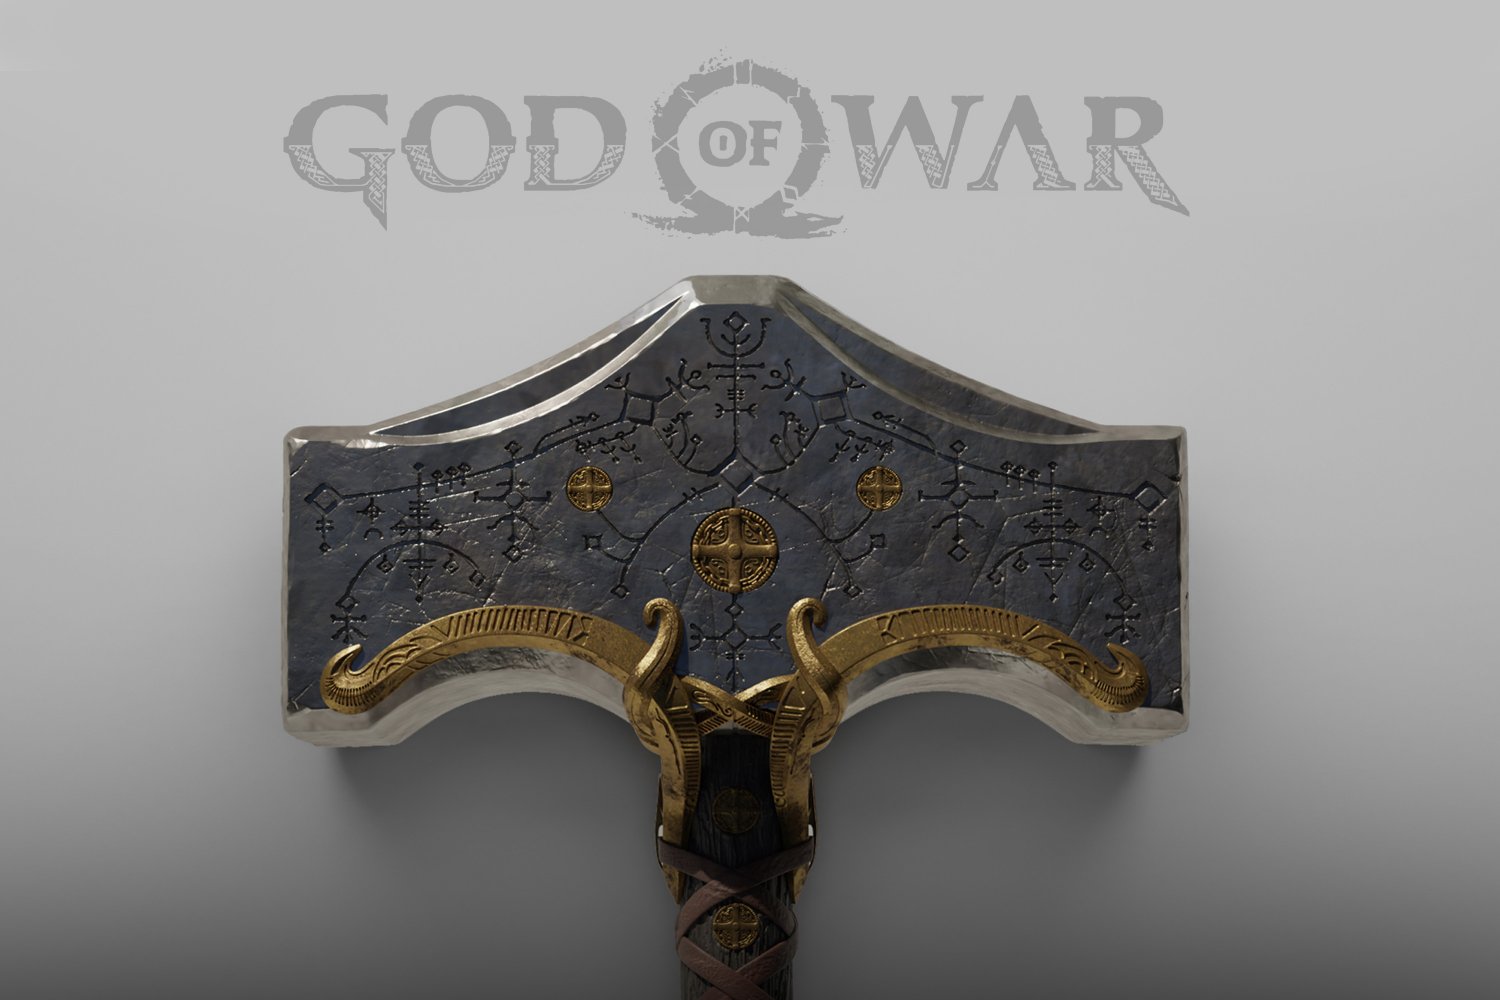 3d printed Mjolnir from God of war (2018) and God of war Ragnarok